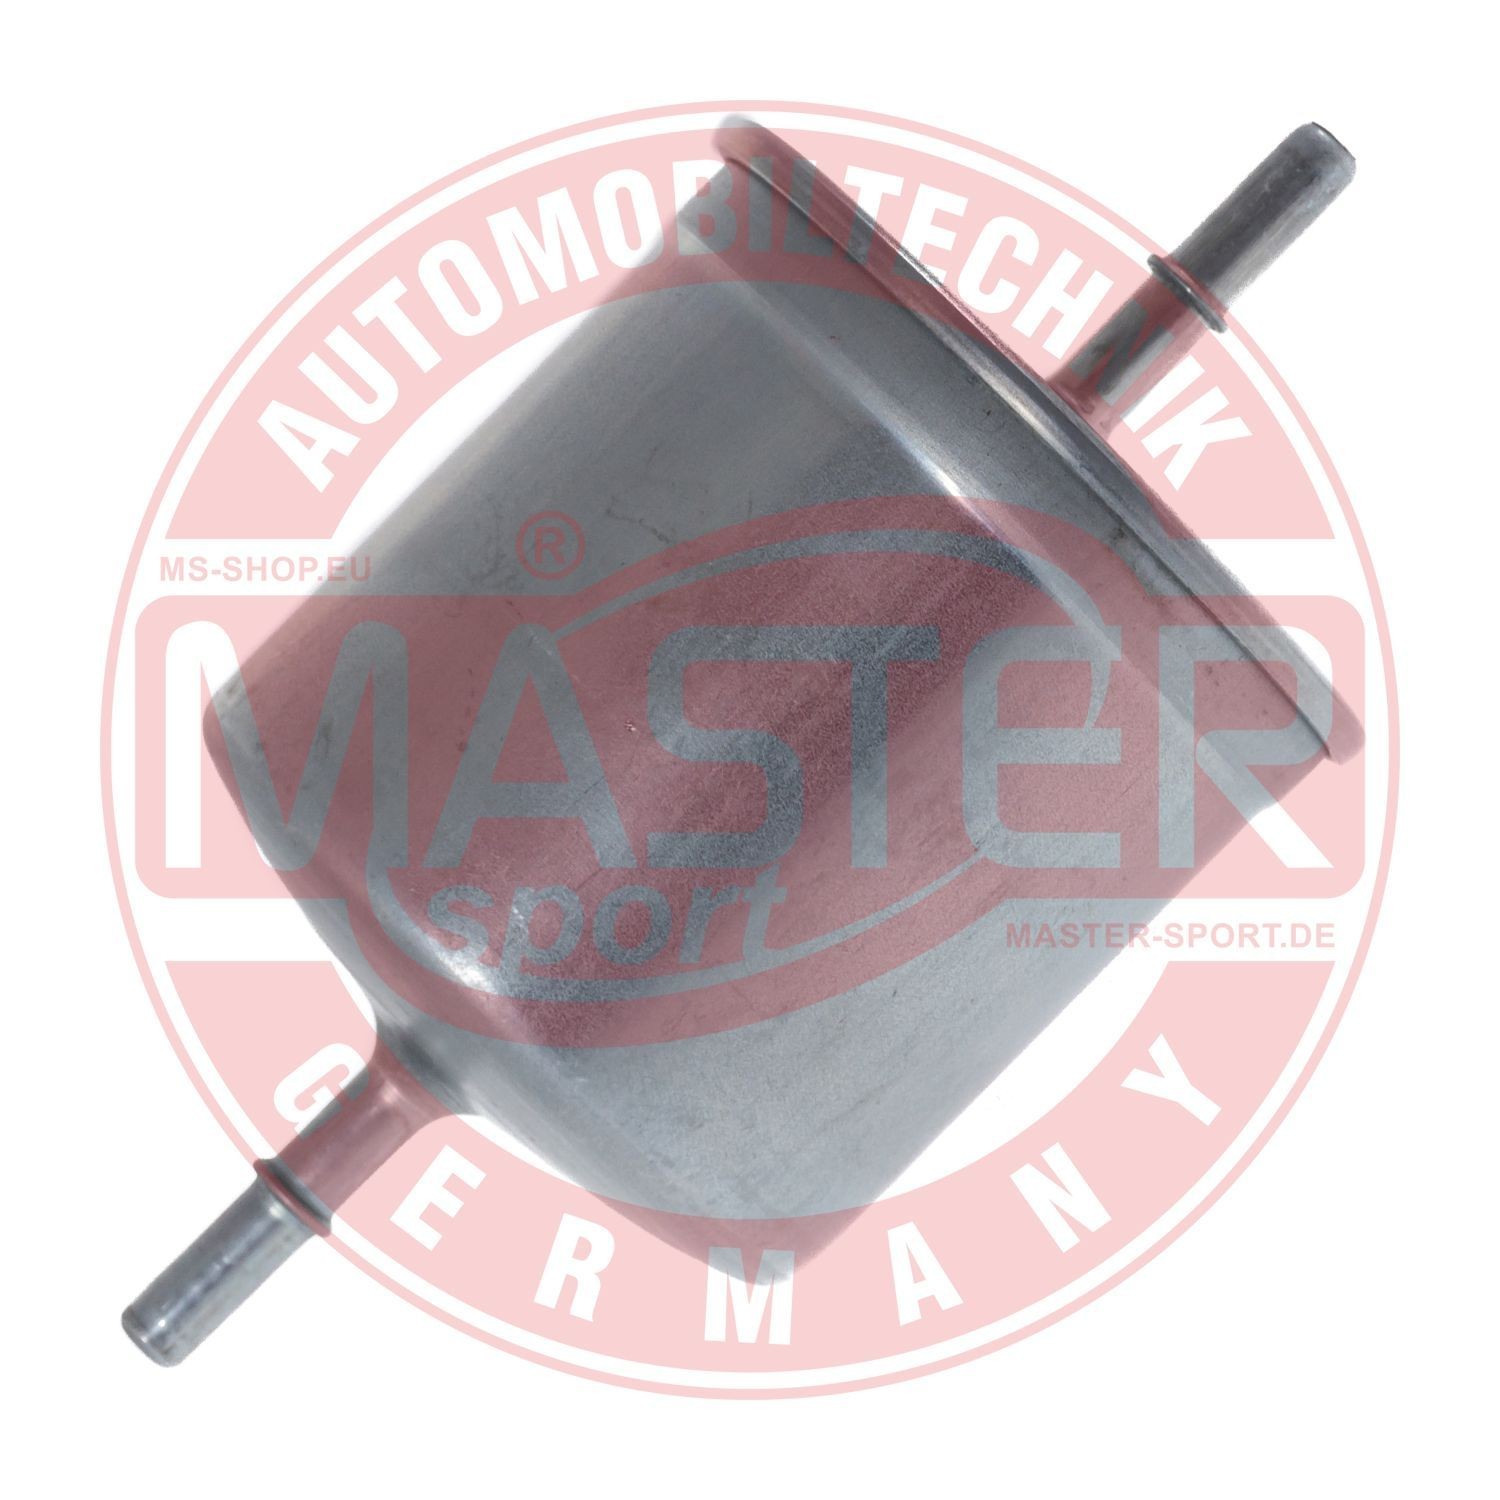 430082220 MASTER-SPORT In-Line Filter, 8mm, 8mm Height: 163mm Inline fuel filter 822/2-KF-PCS-MS buy